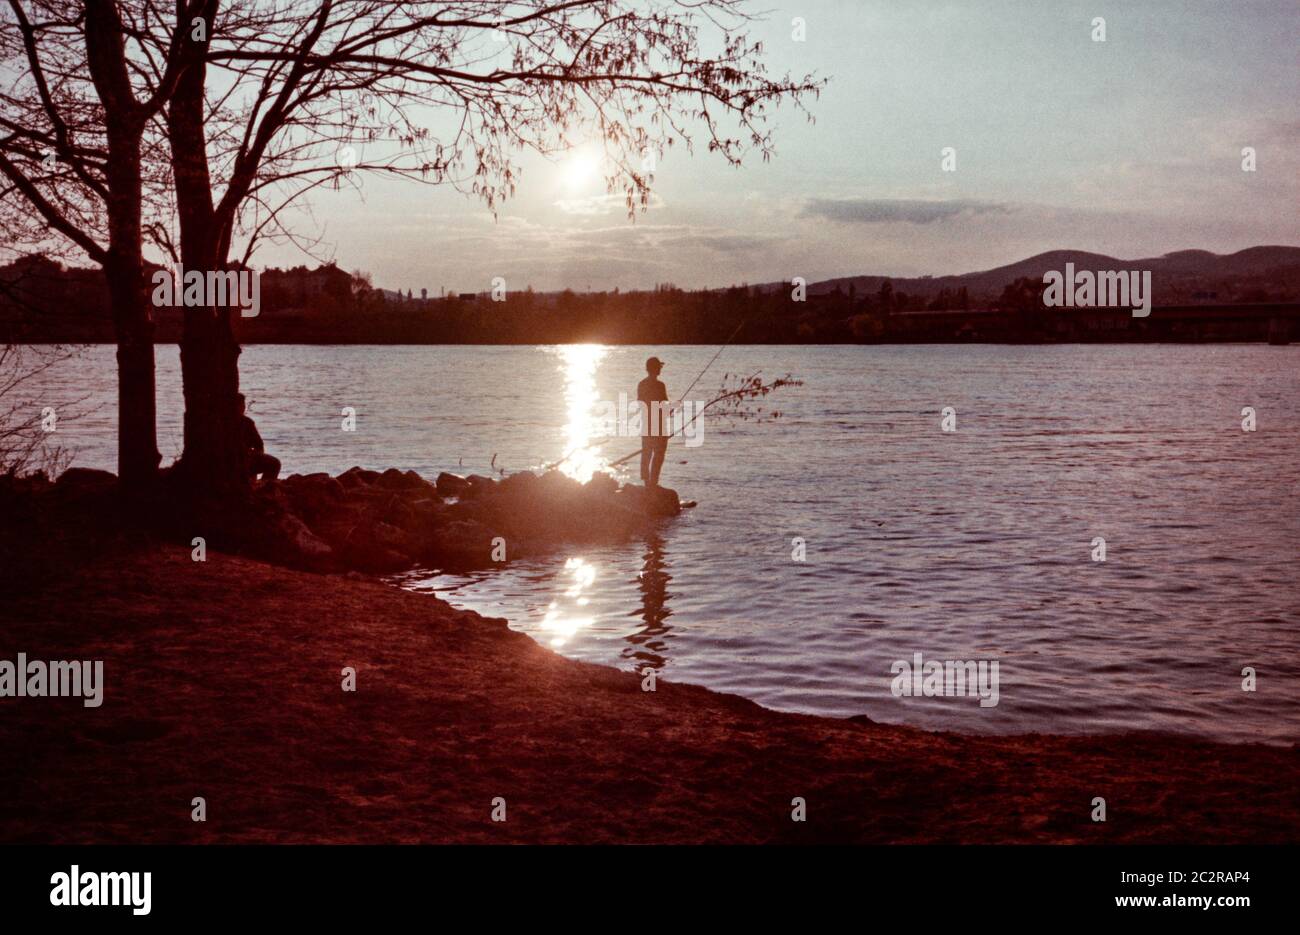 Man fishing at the water at sunset or sunrise. Shot on analog film. Stock Photo